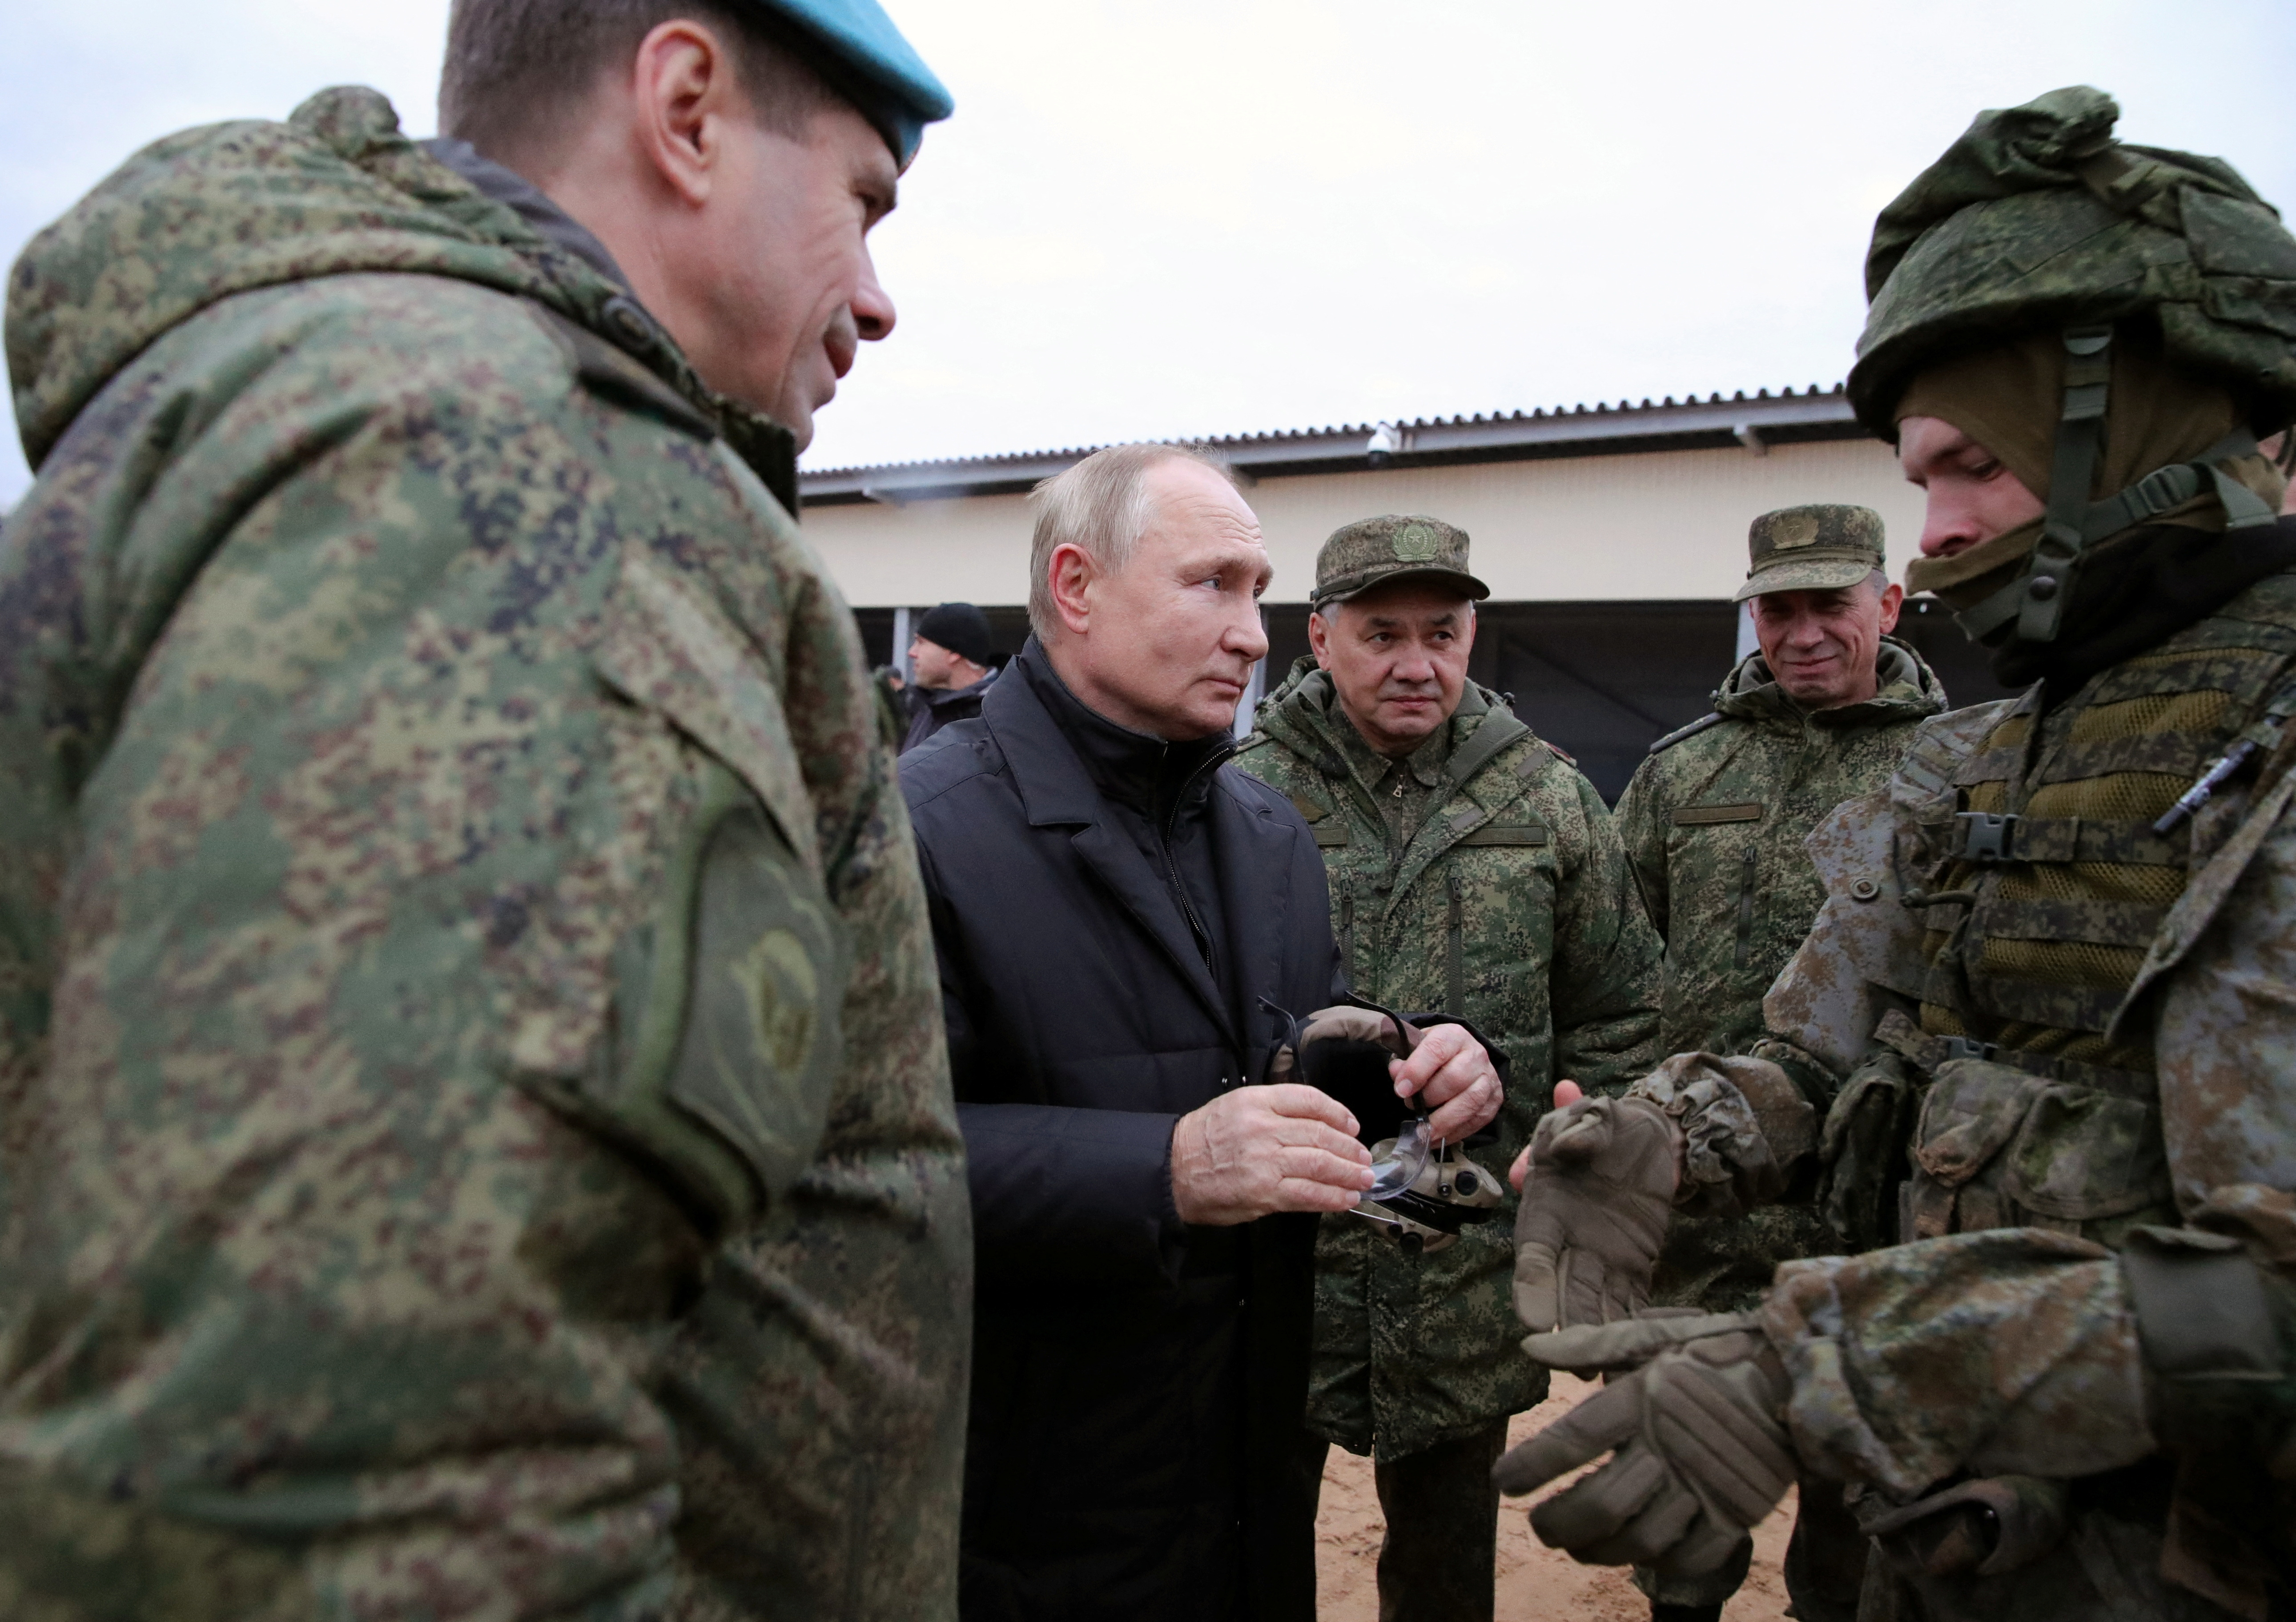 Putin's troops are accused of war crimes in Ukraine (Sputnik/Mikhail Klimentyev/Kremlin via REUTERS)